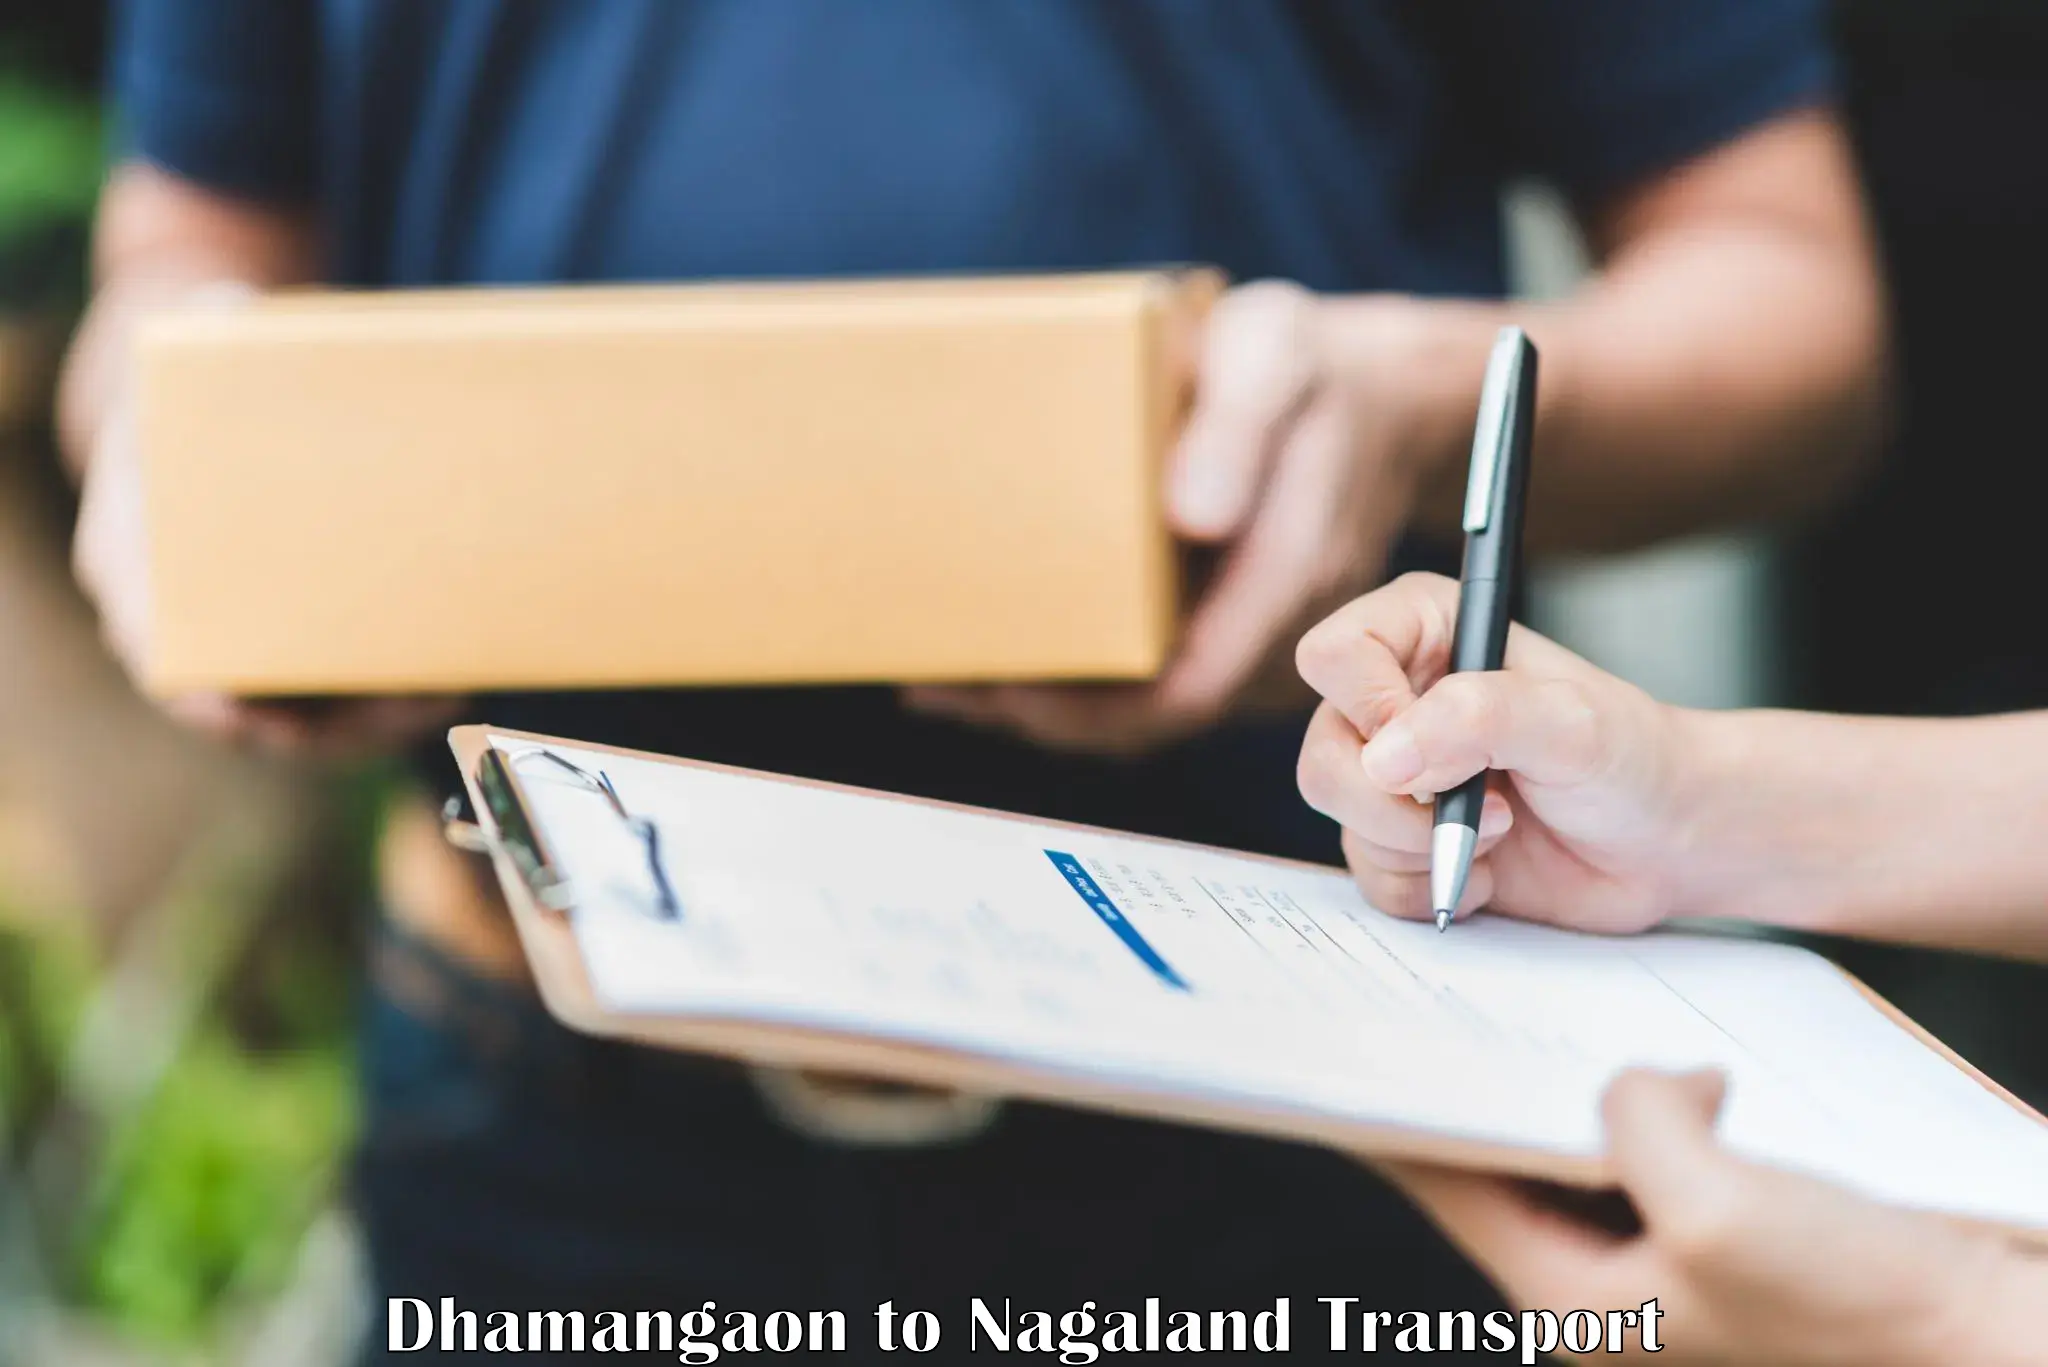 Online transport service Dhamangaon to Nagaland